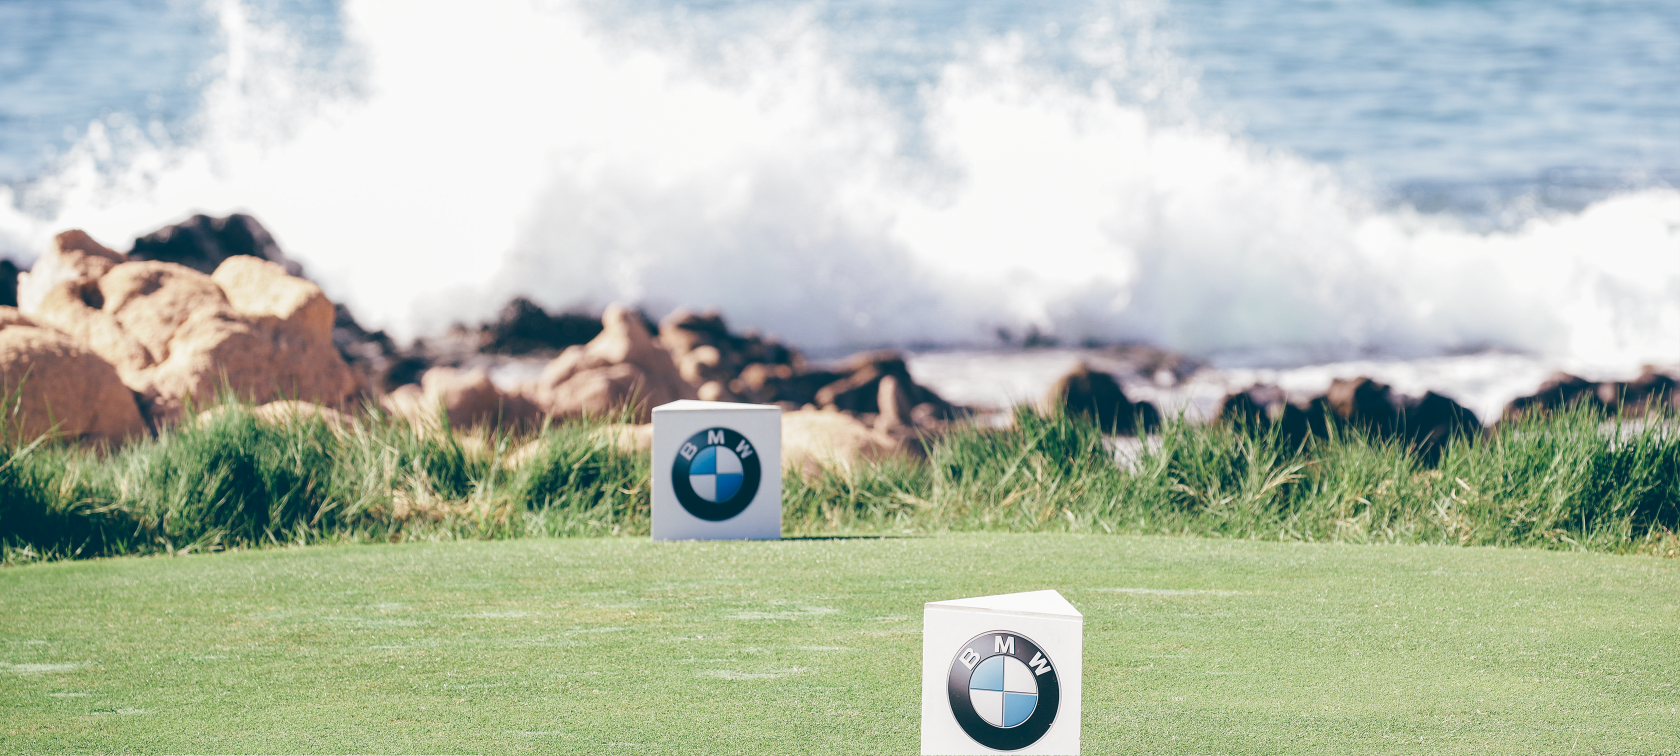 Skolkovo BMW Golf Cup